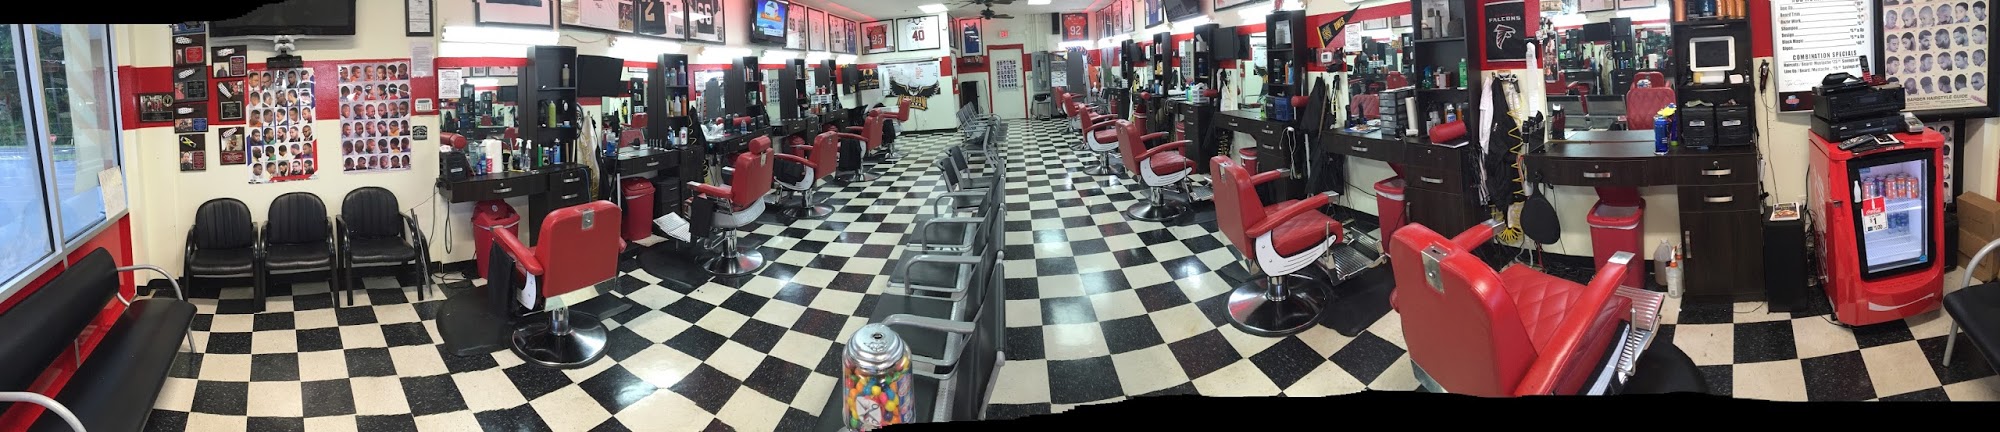 AMAZING Cuts Barber Shop